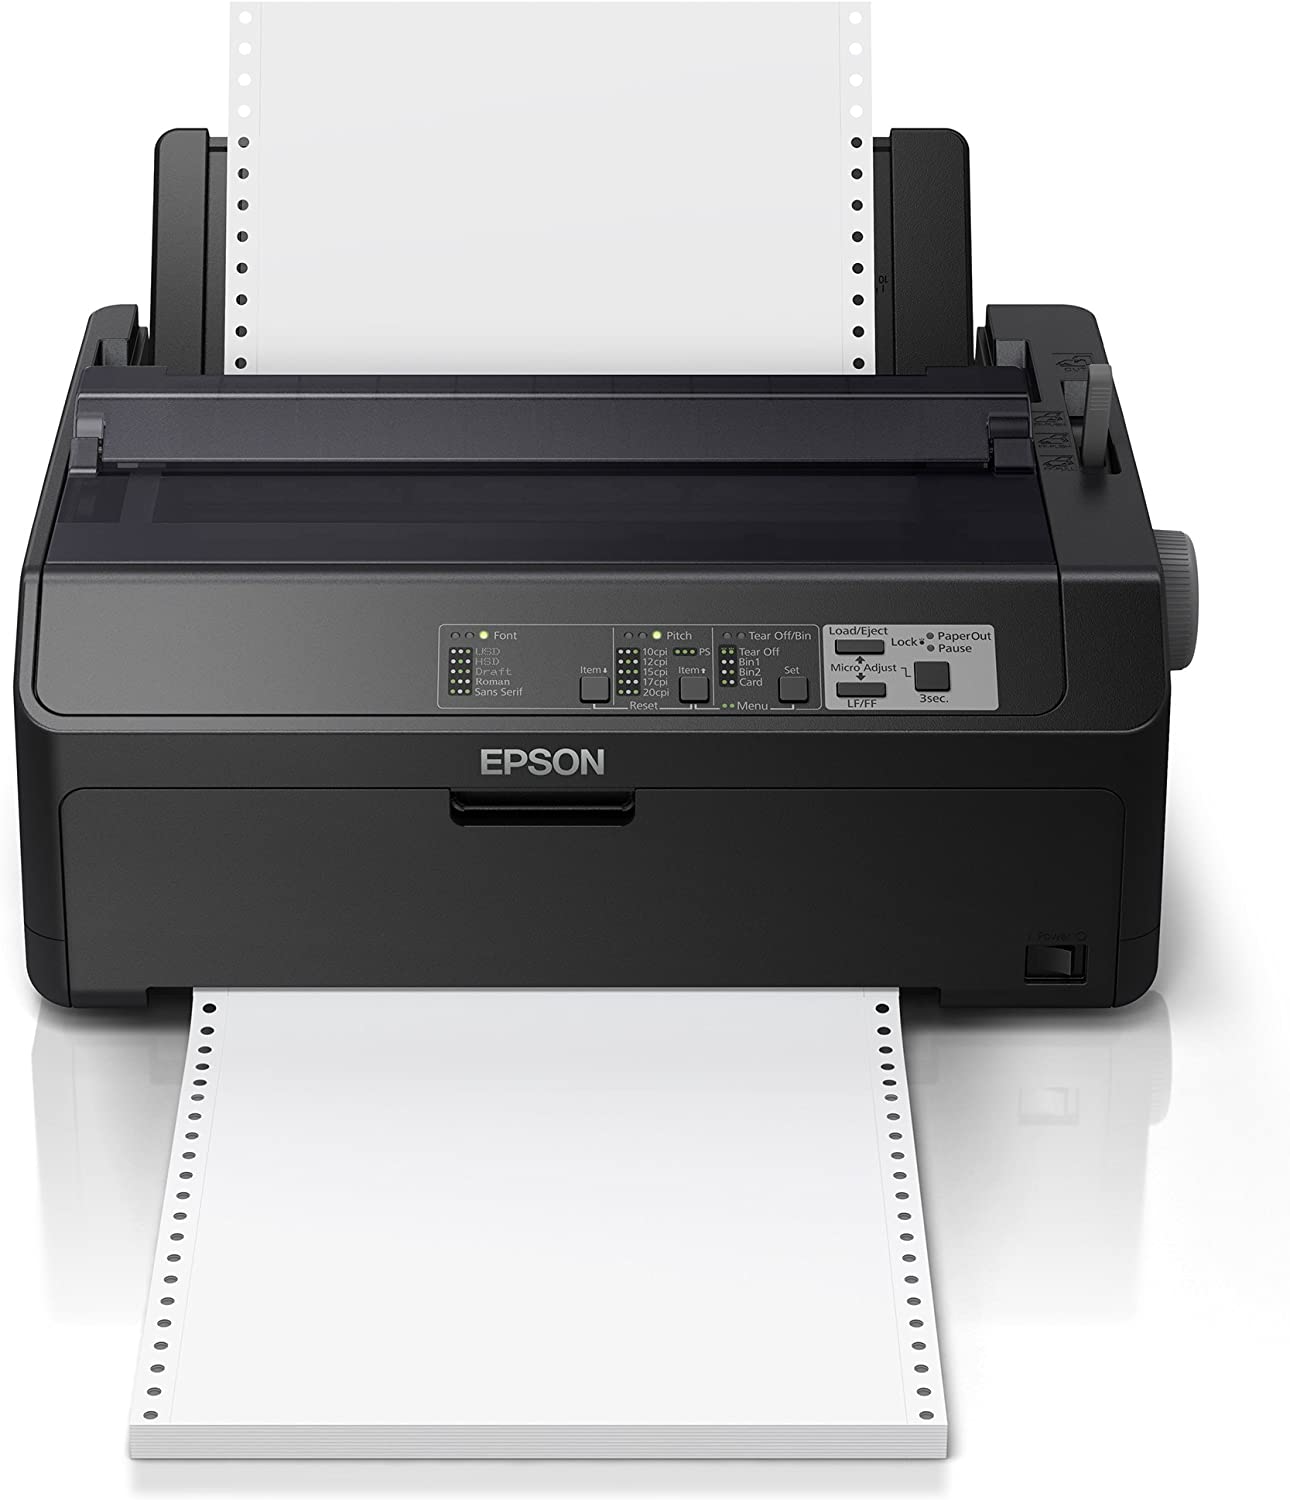 Epson FX-890II NT (Network Version) Impact Printer.